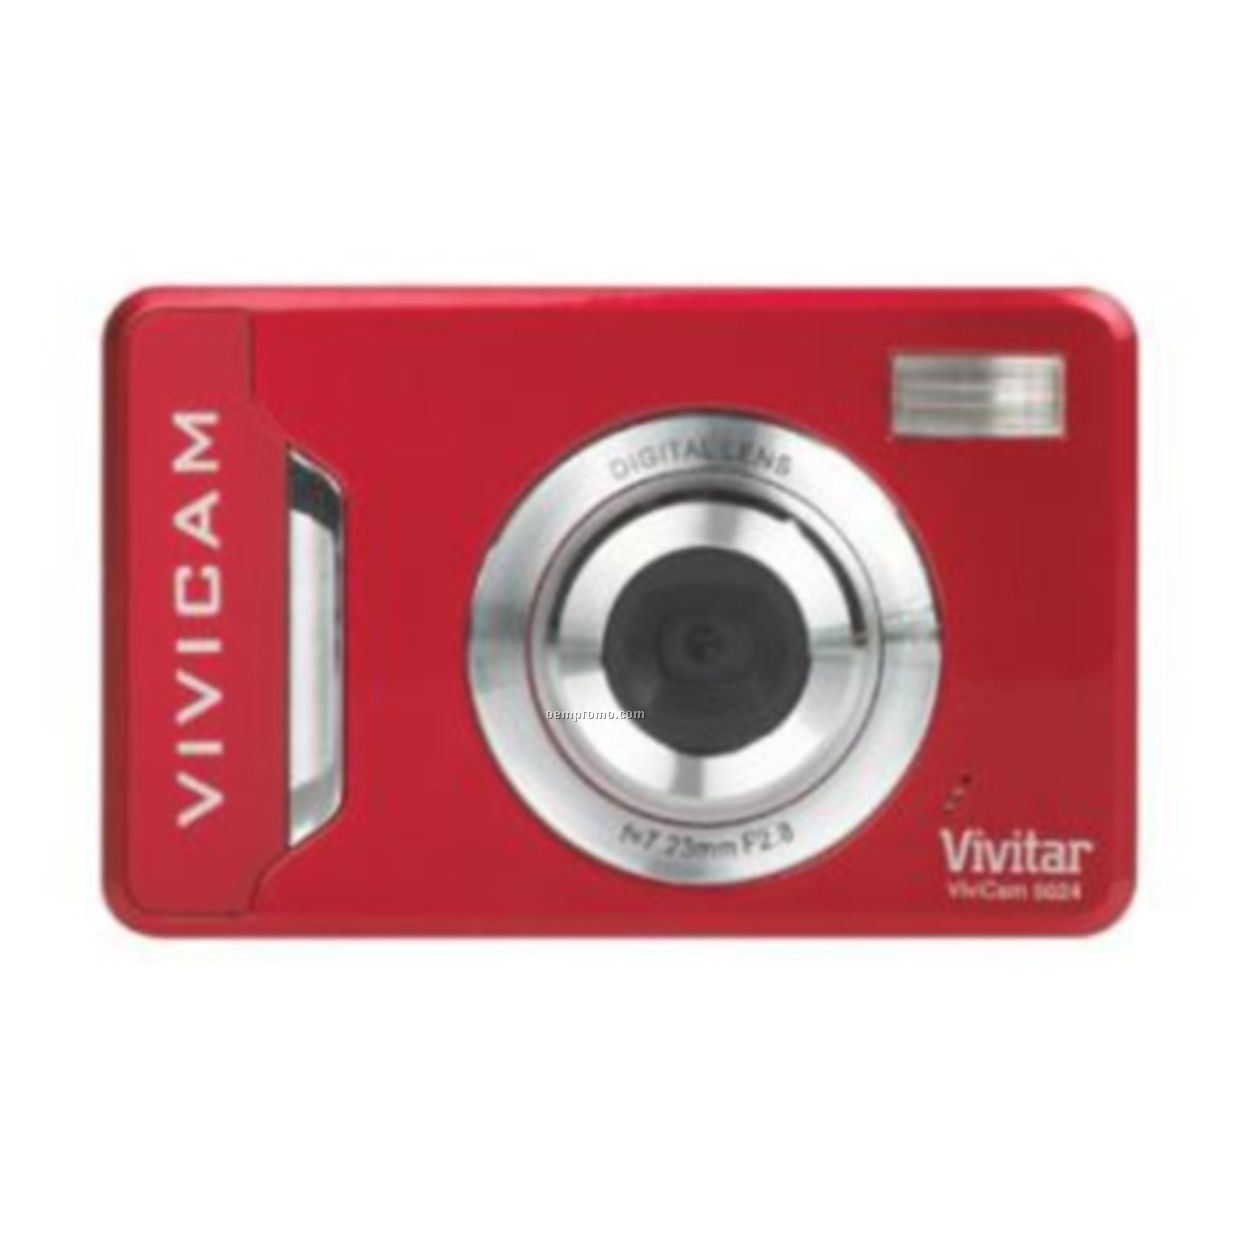 Vivitar Digital Camera Software Free Download